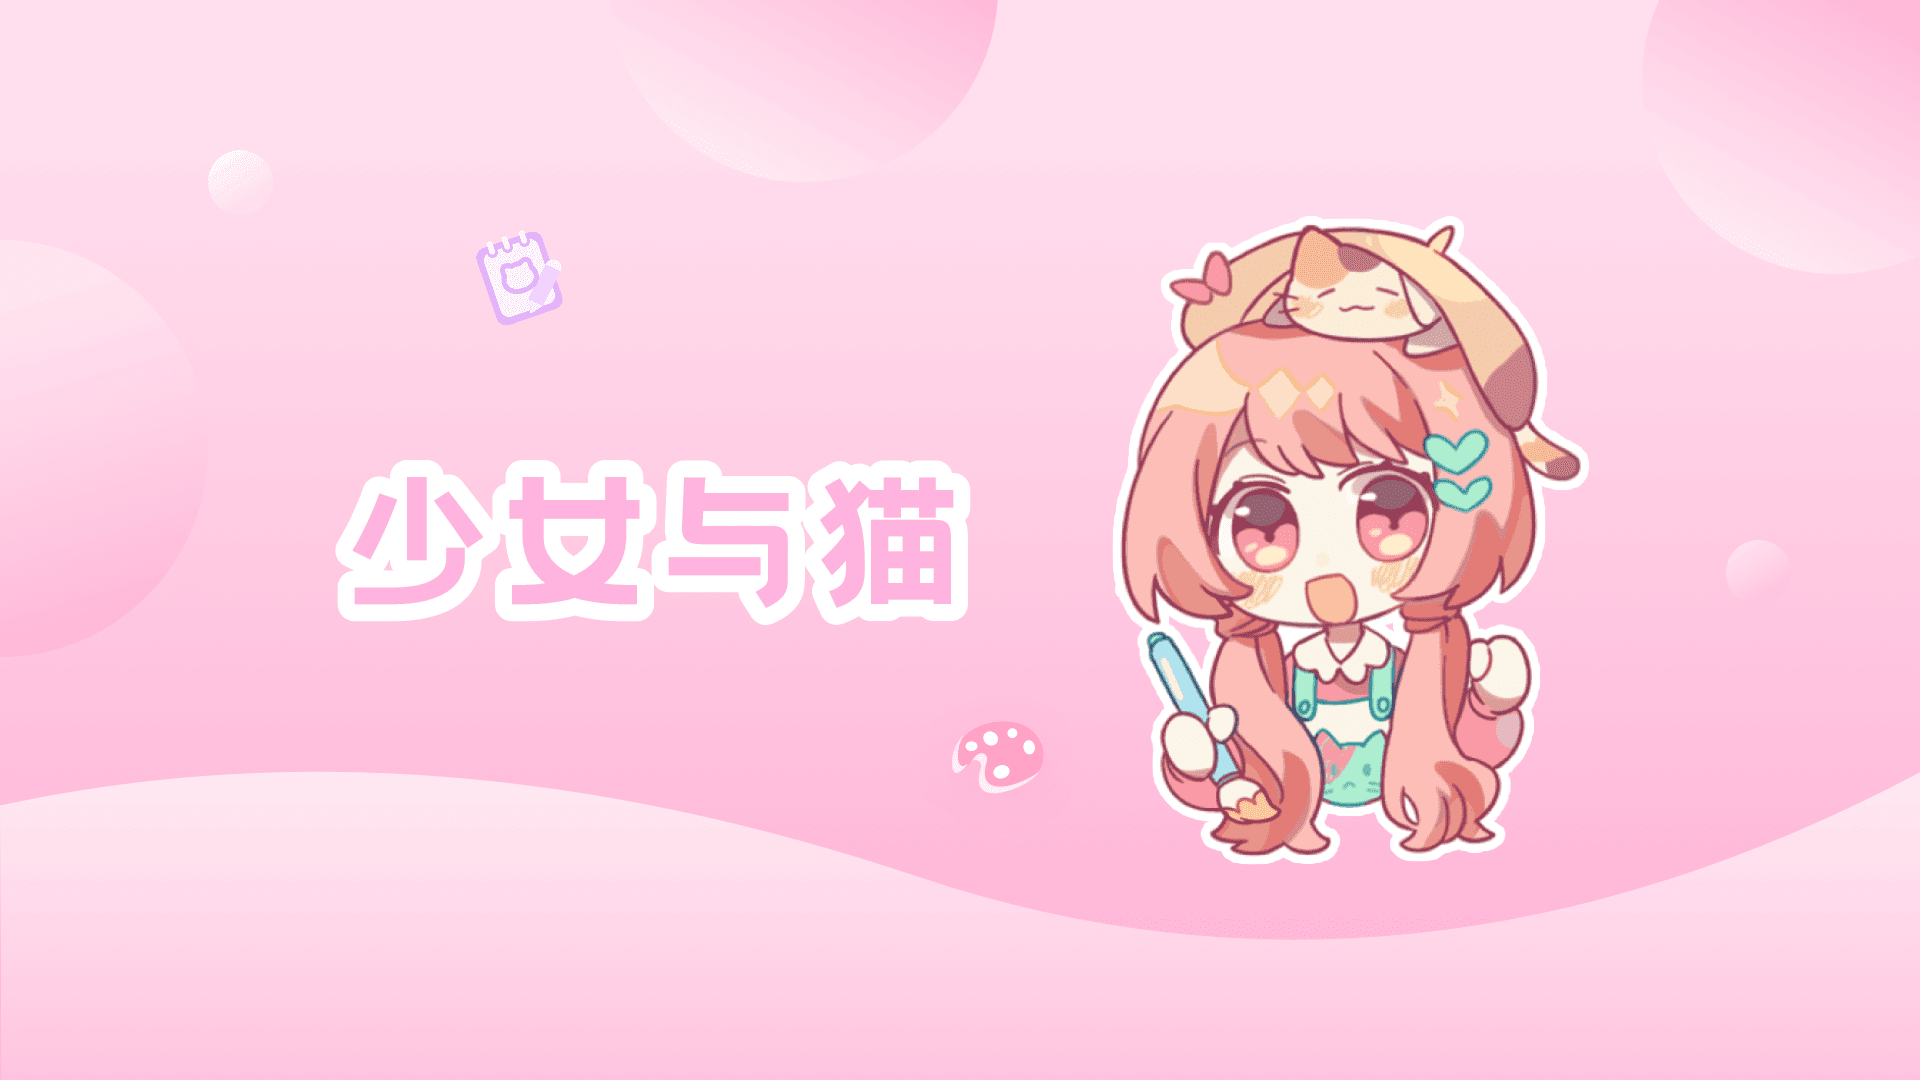 Banner of 少女與貓 1.4.3